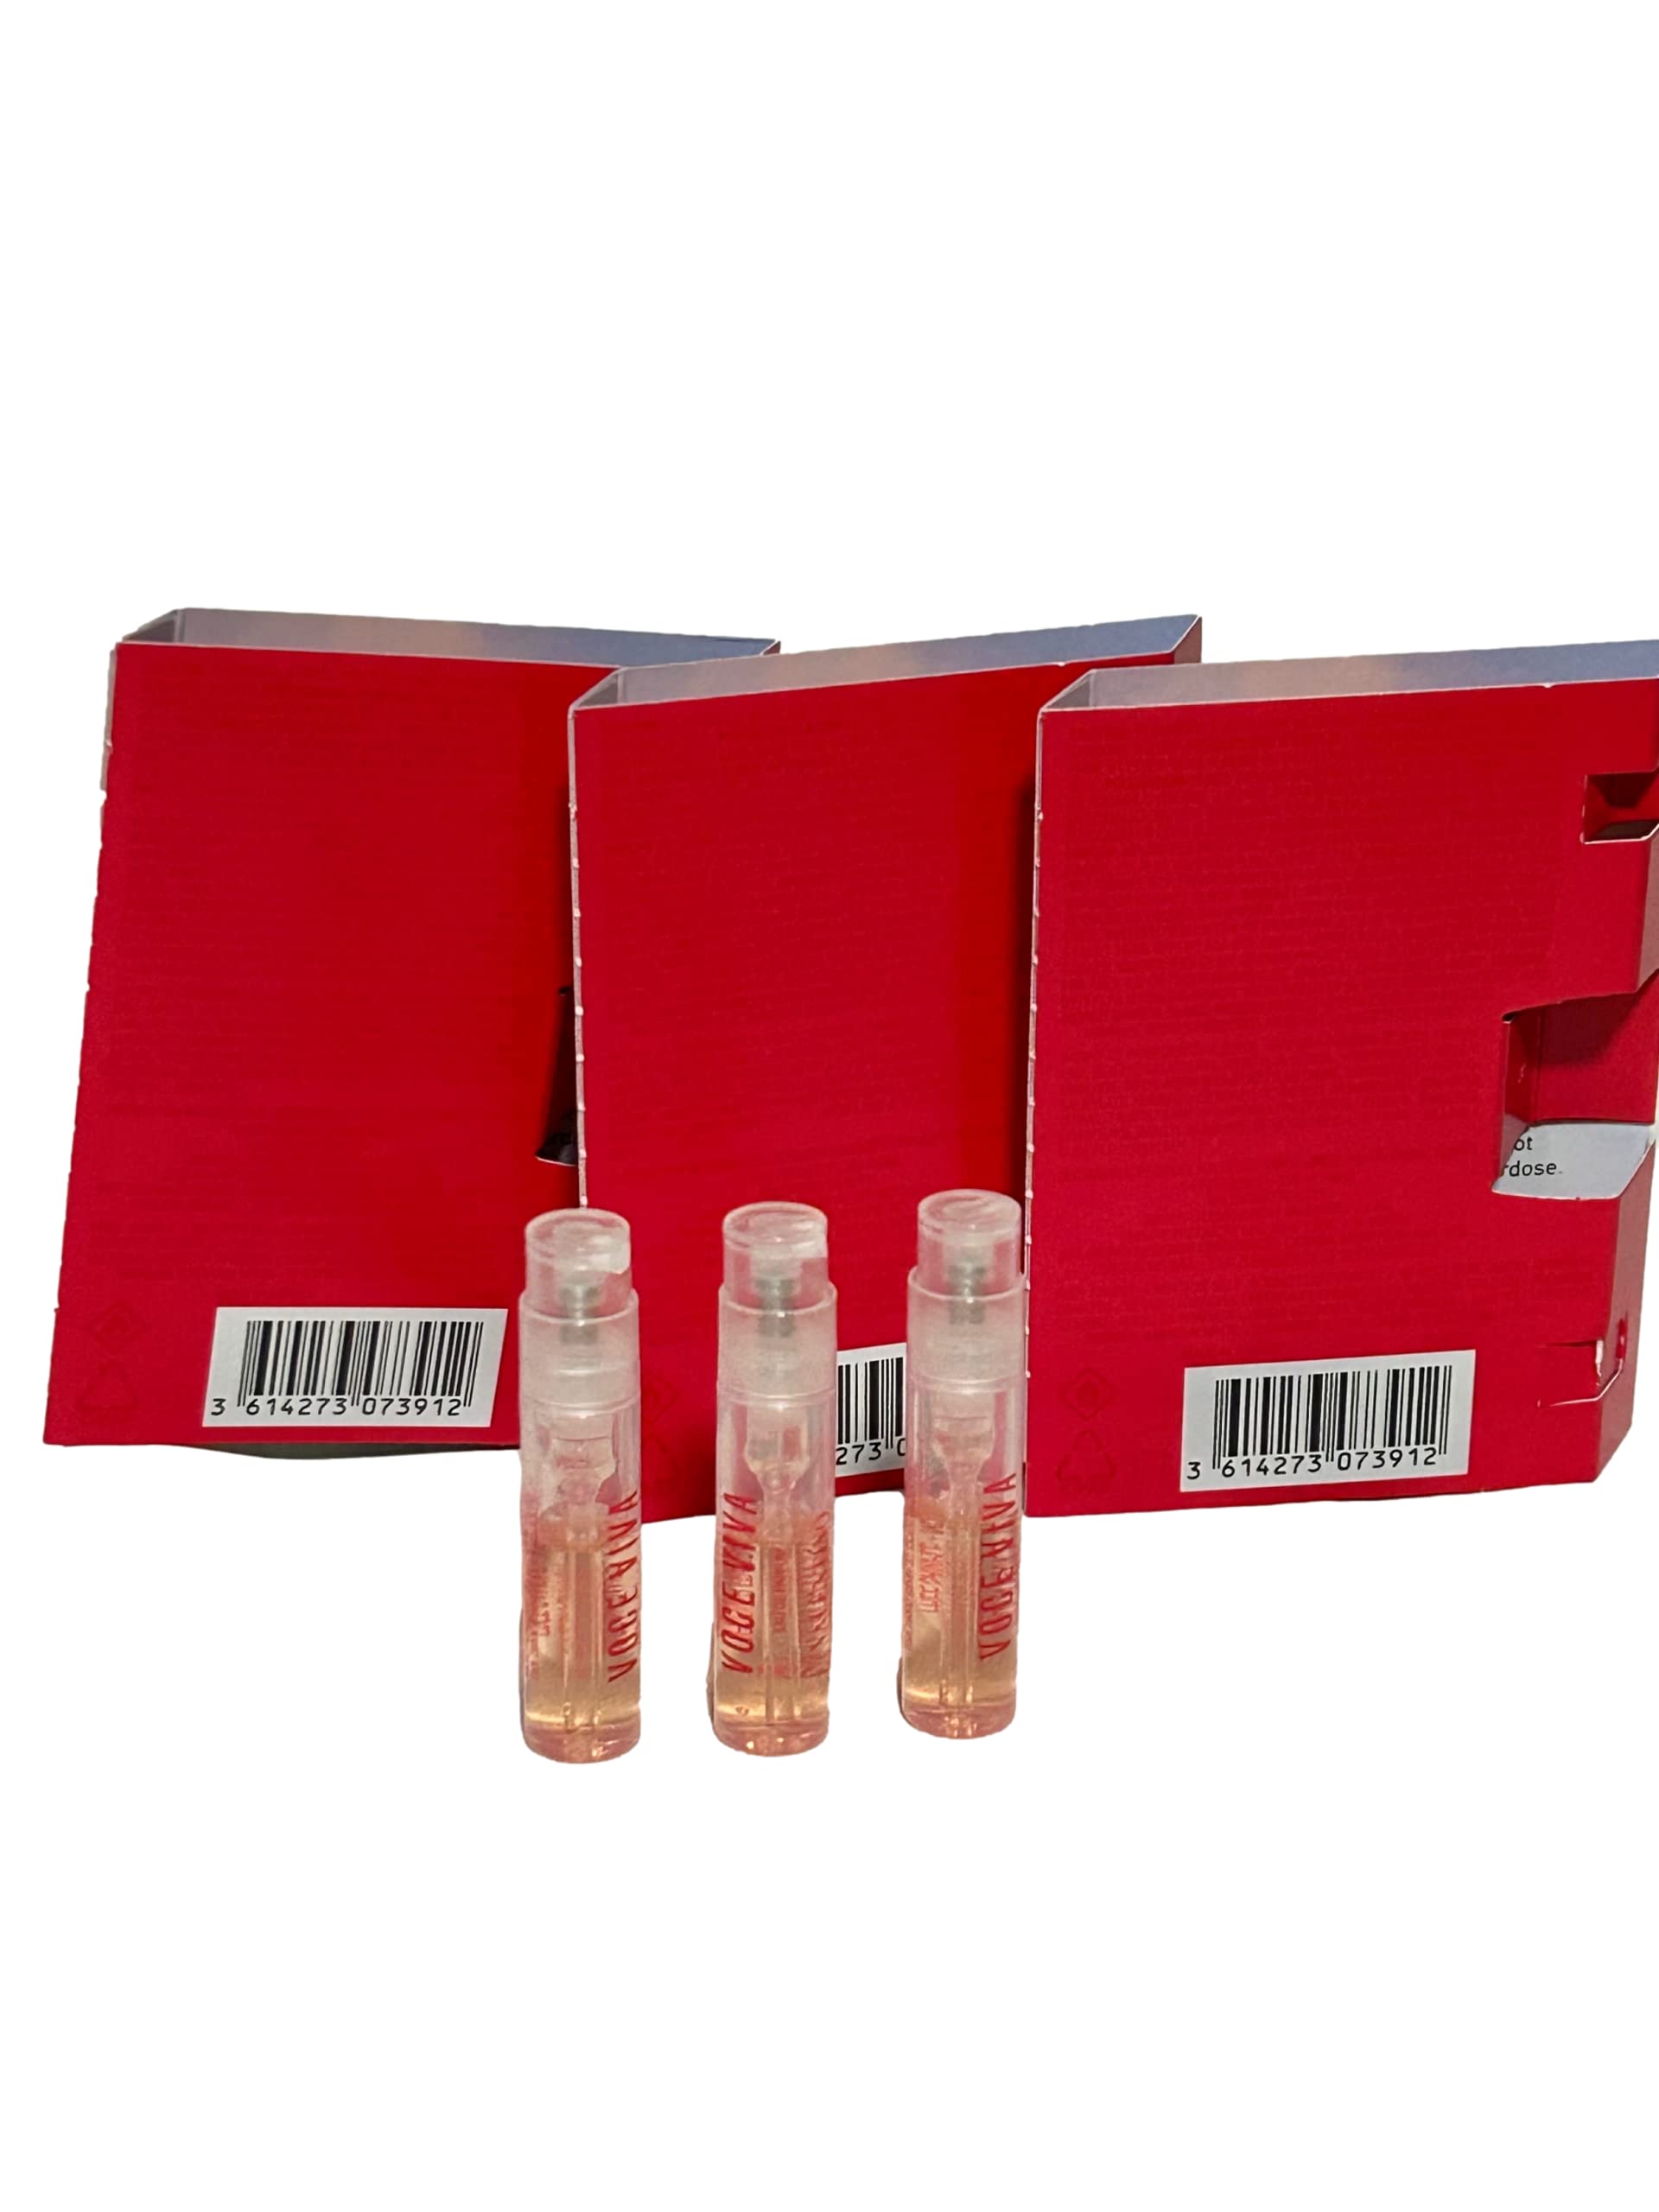 Valentino Voce Viva Eau de Parfum, Women Spray Perfume Trial Sample Size, 0.04 fl oz (set of 3)